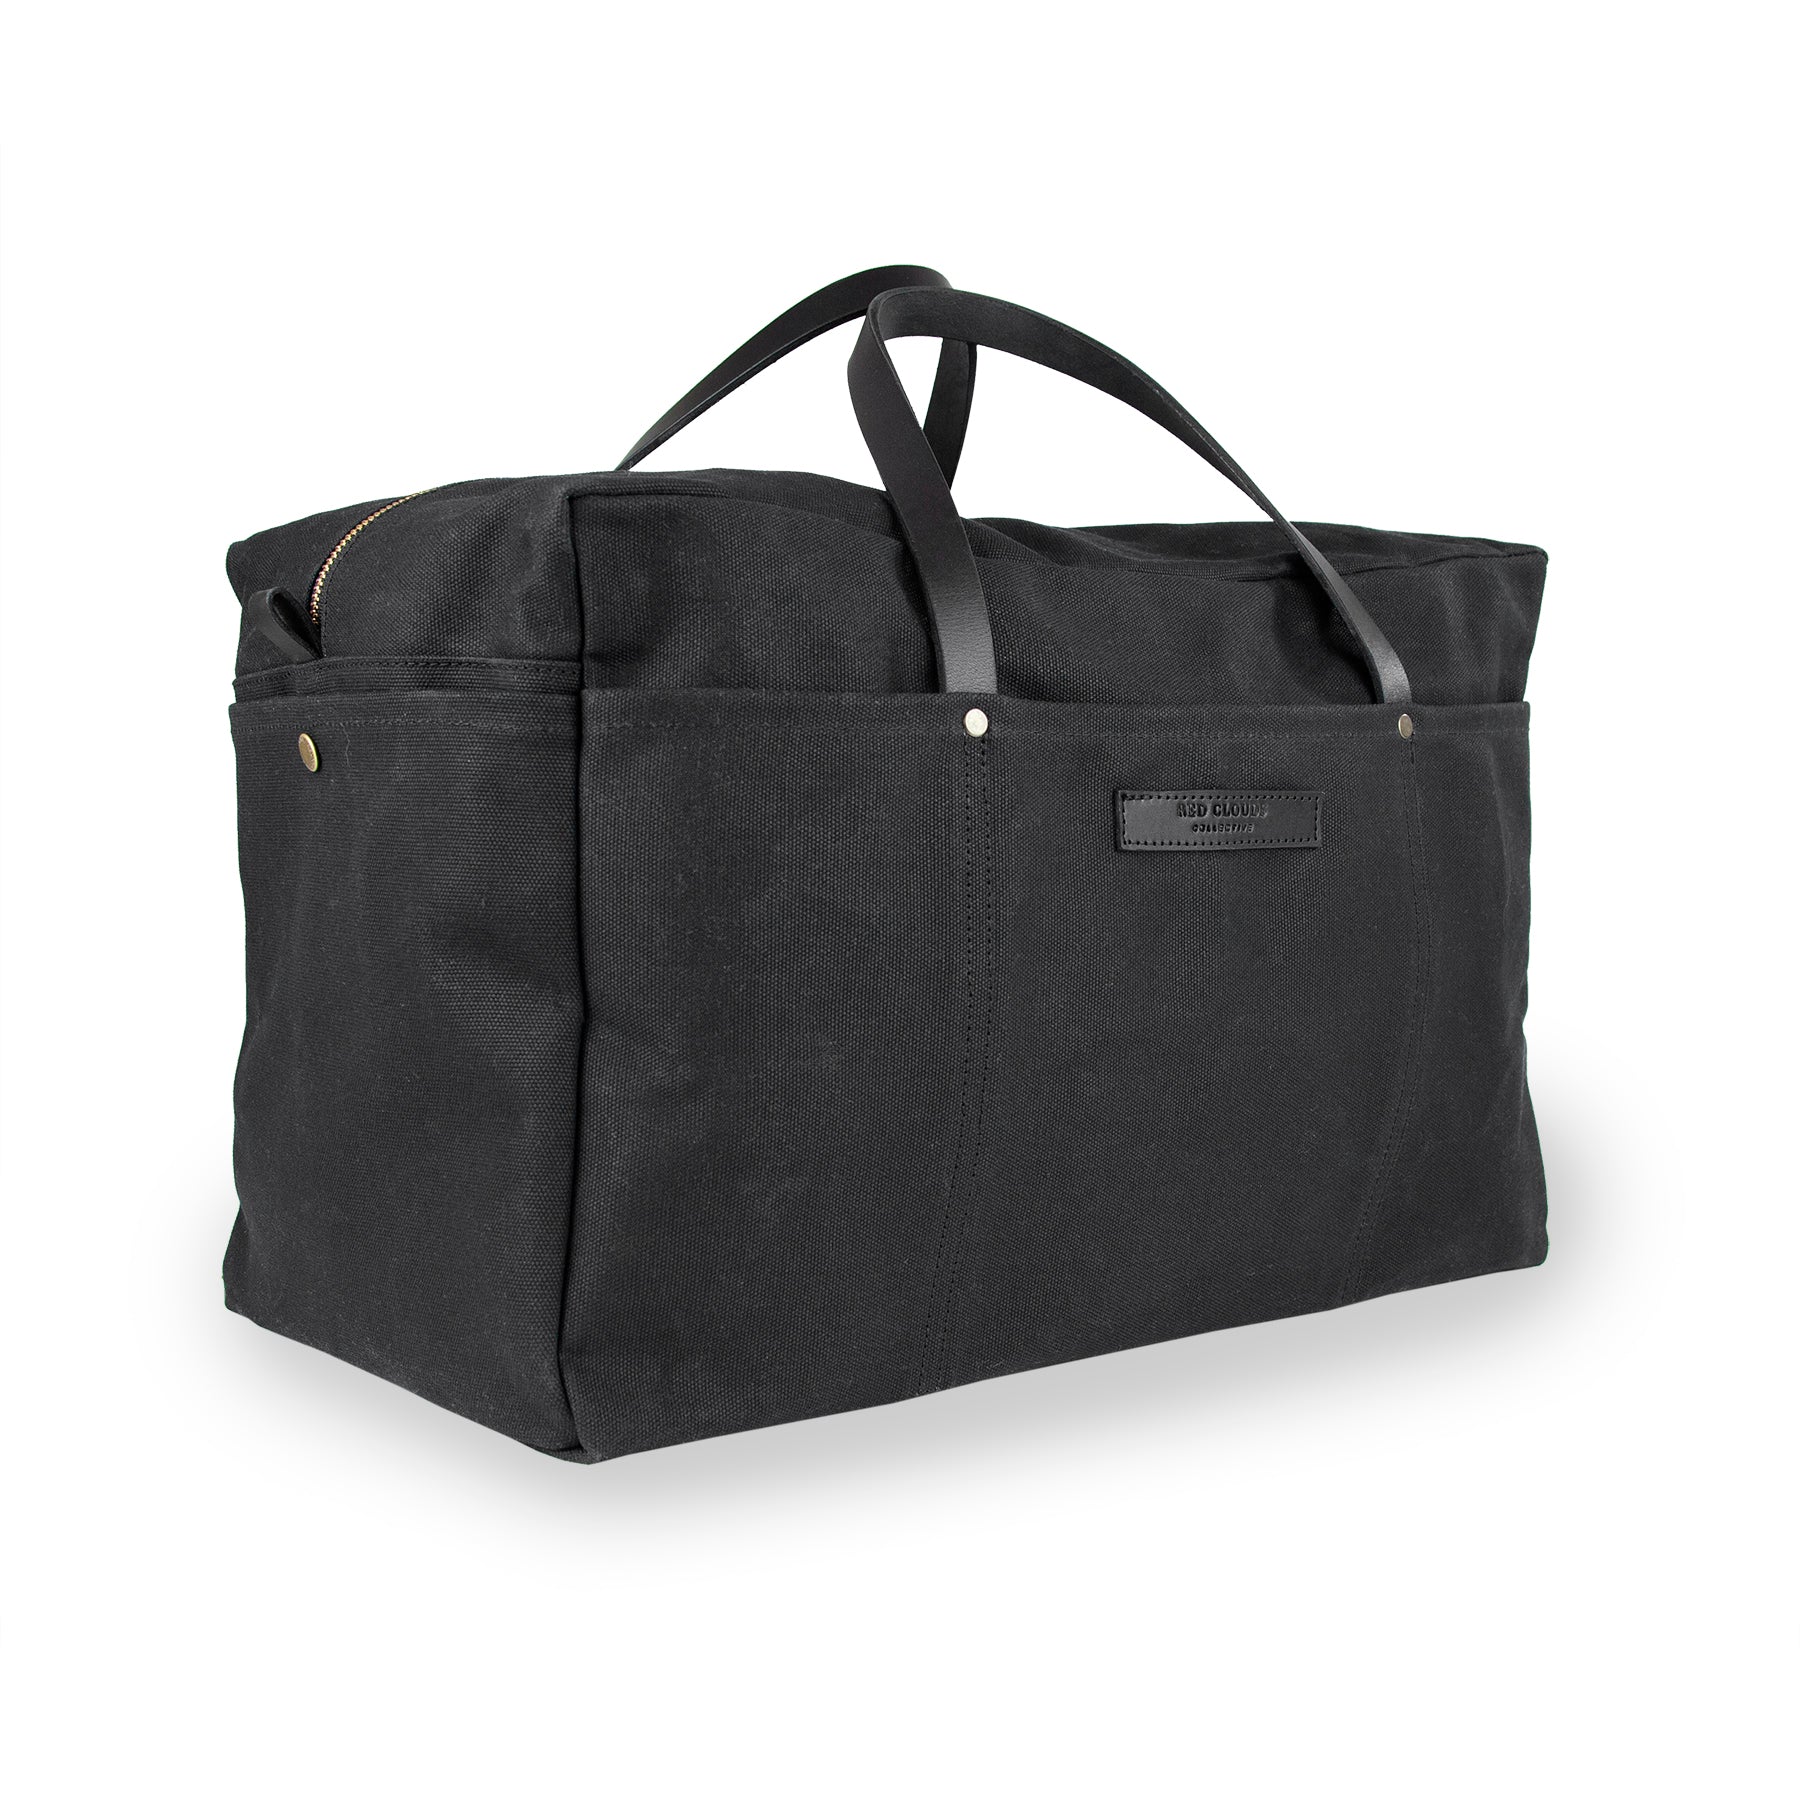 Buy Work Tote Bag Top Handle Handbag Shoulder Bags Crossbody Travel Bag  With Zipper & Shoulder Strap For Men And Women at Amazon.in